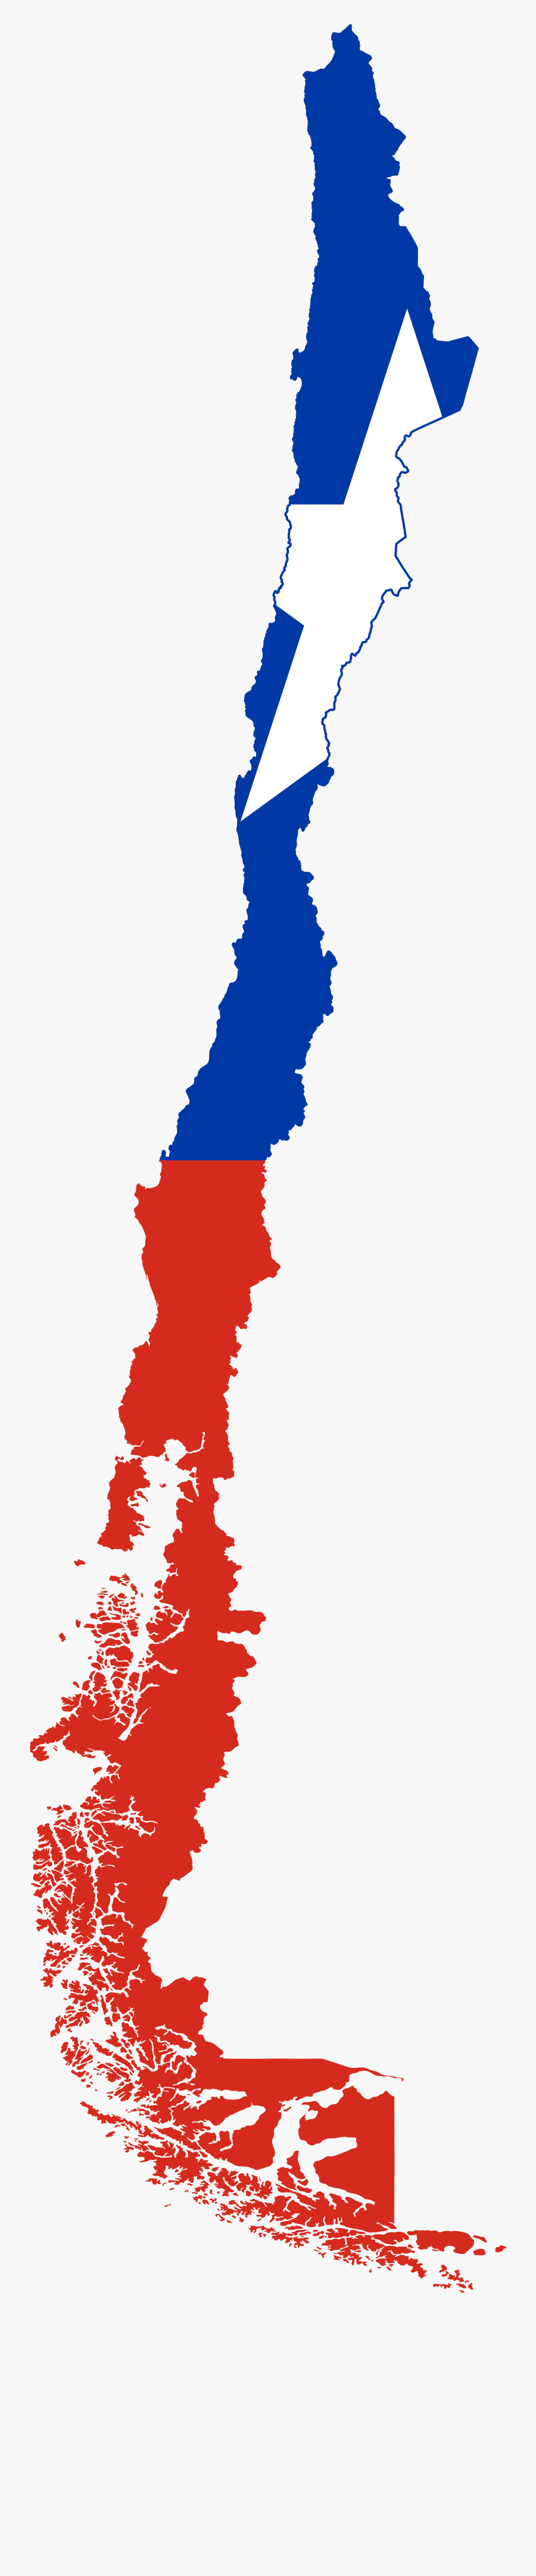 Transparent Images Pluspng Open - Chile Map And Flag, Transparent Clipart